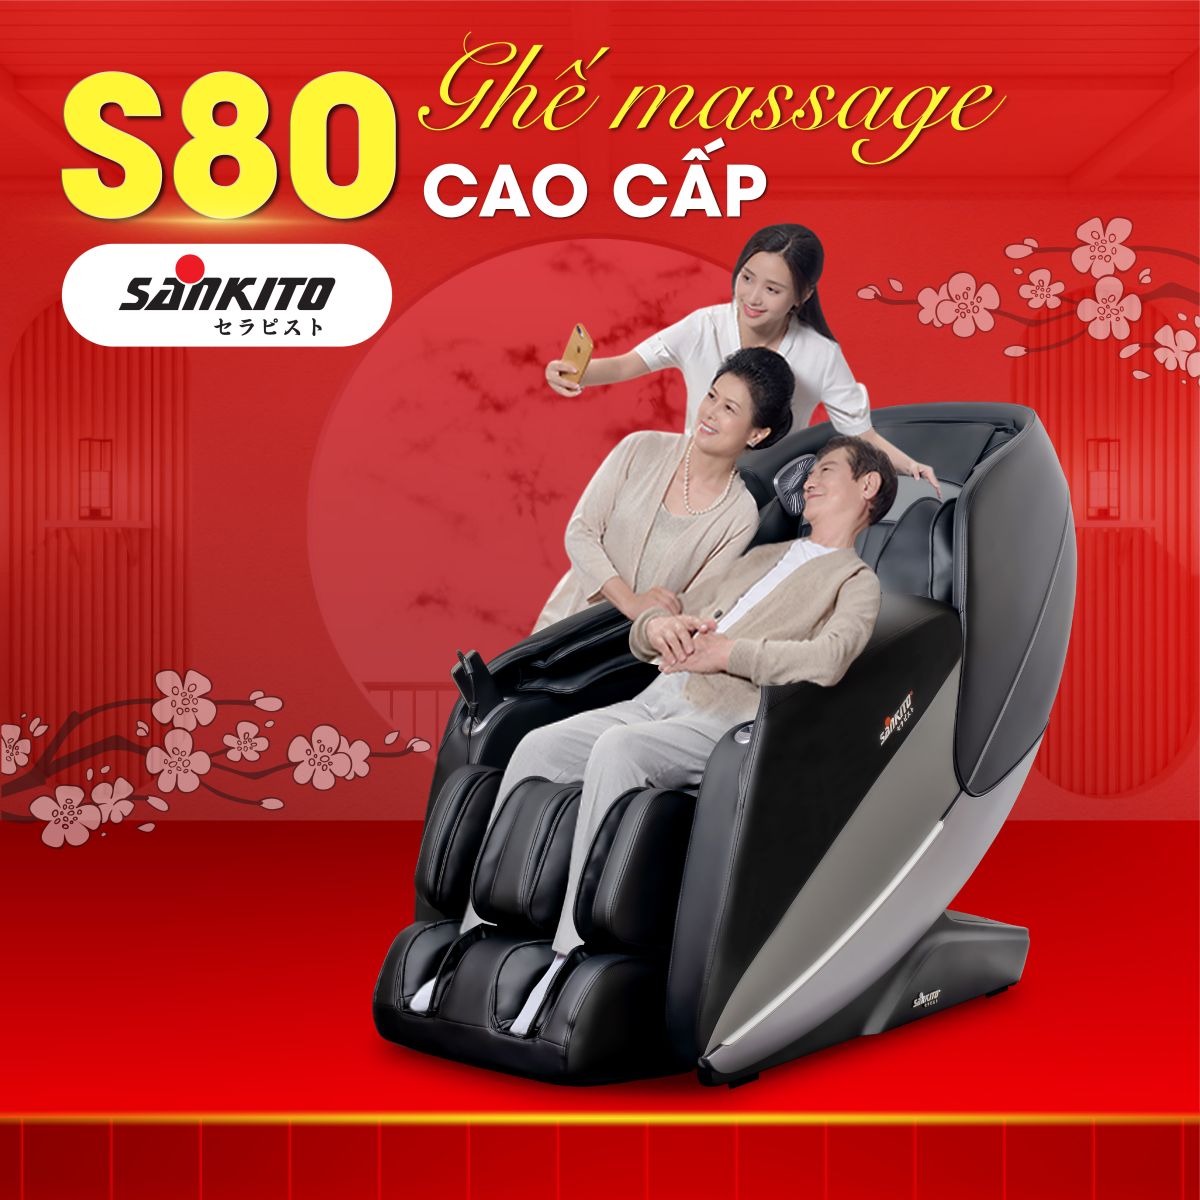 Ghế massage giá rẻ S-80